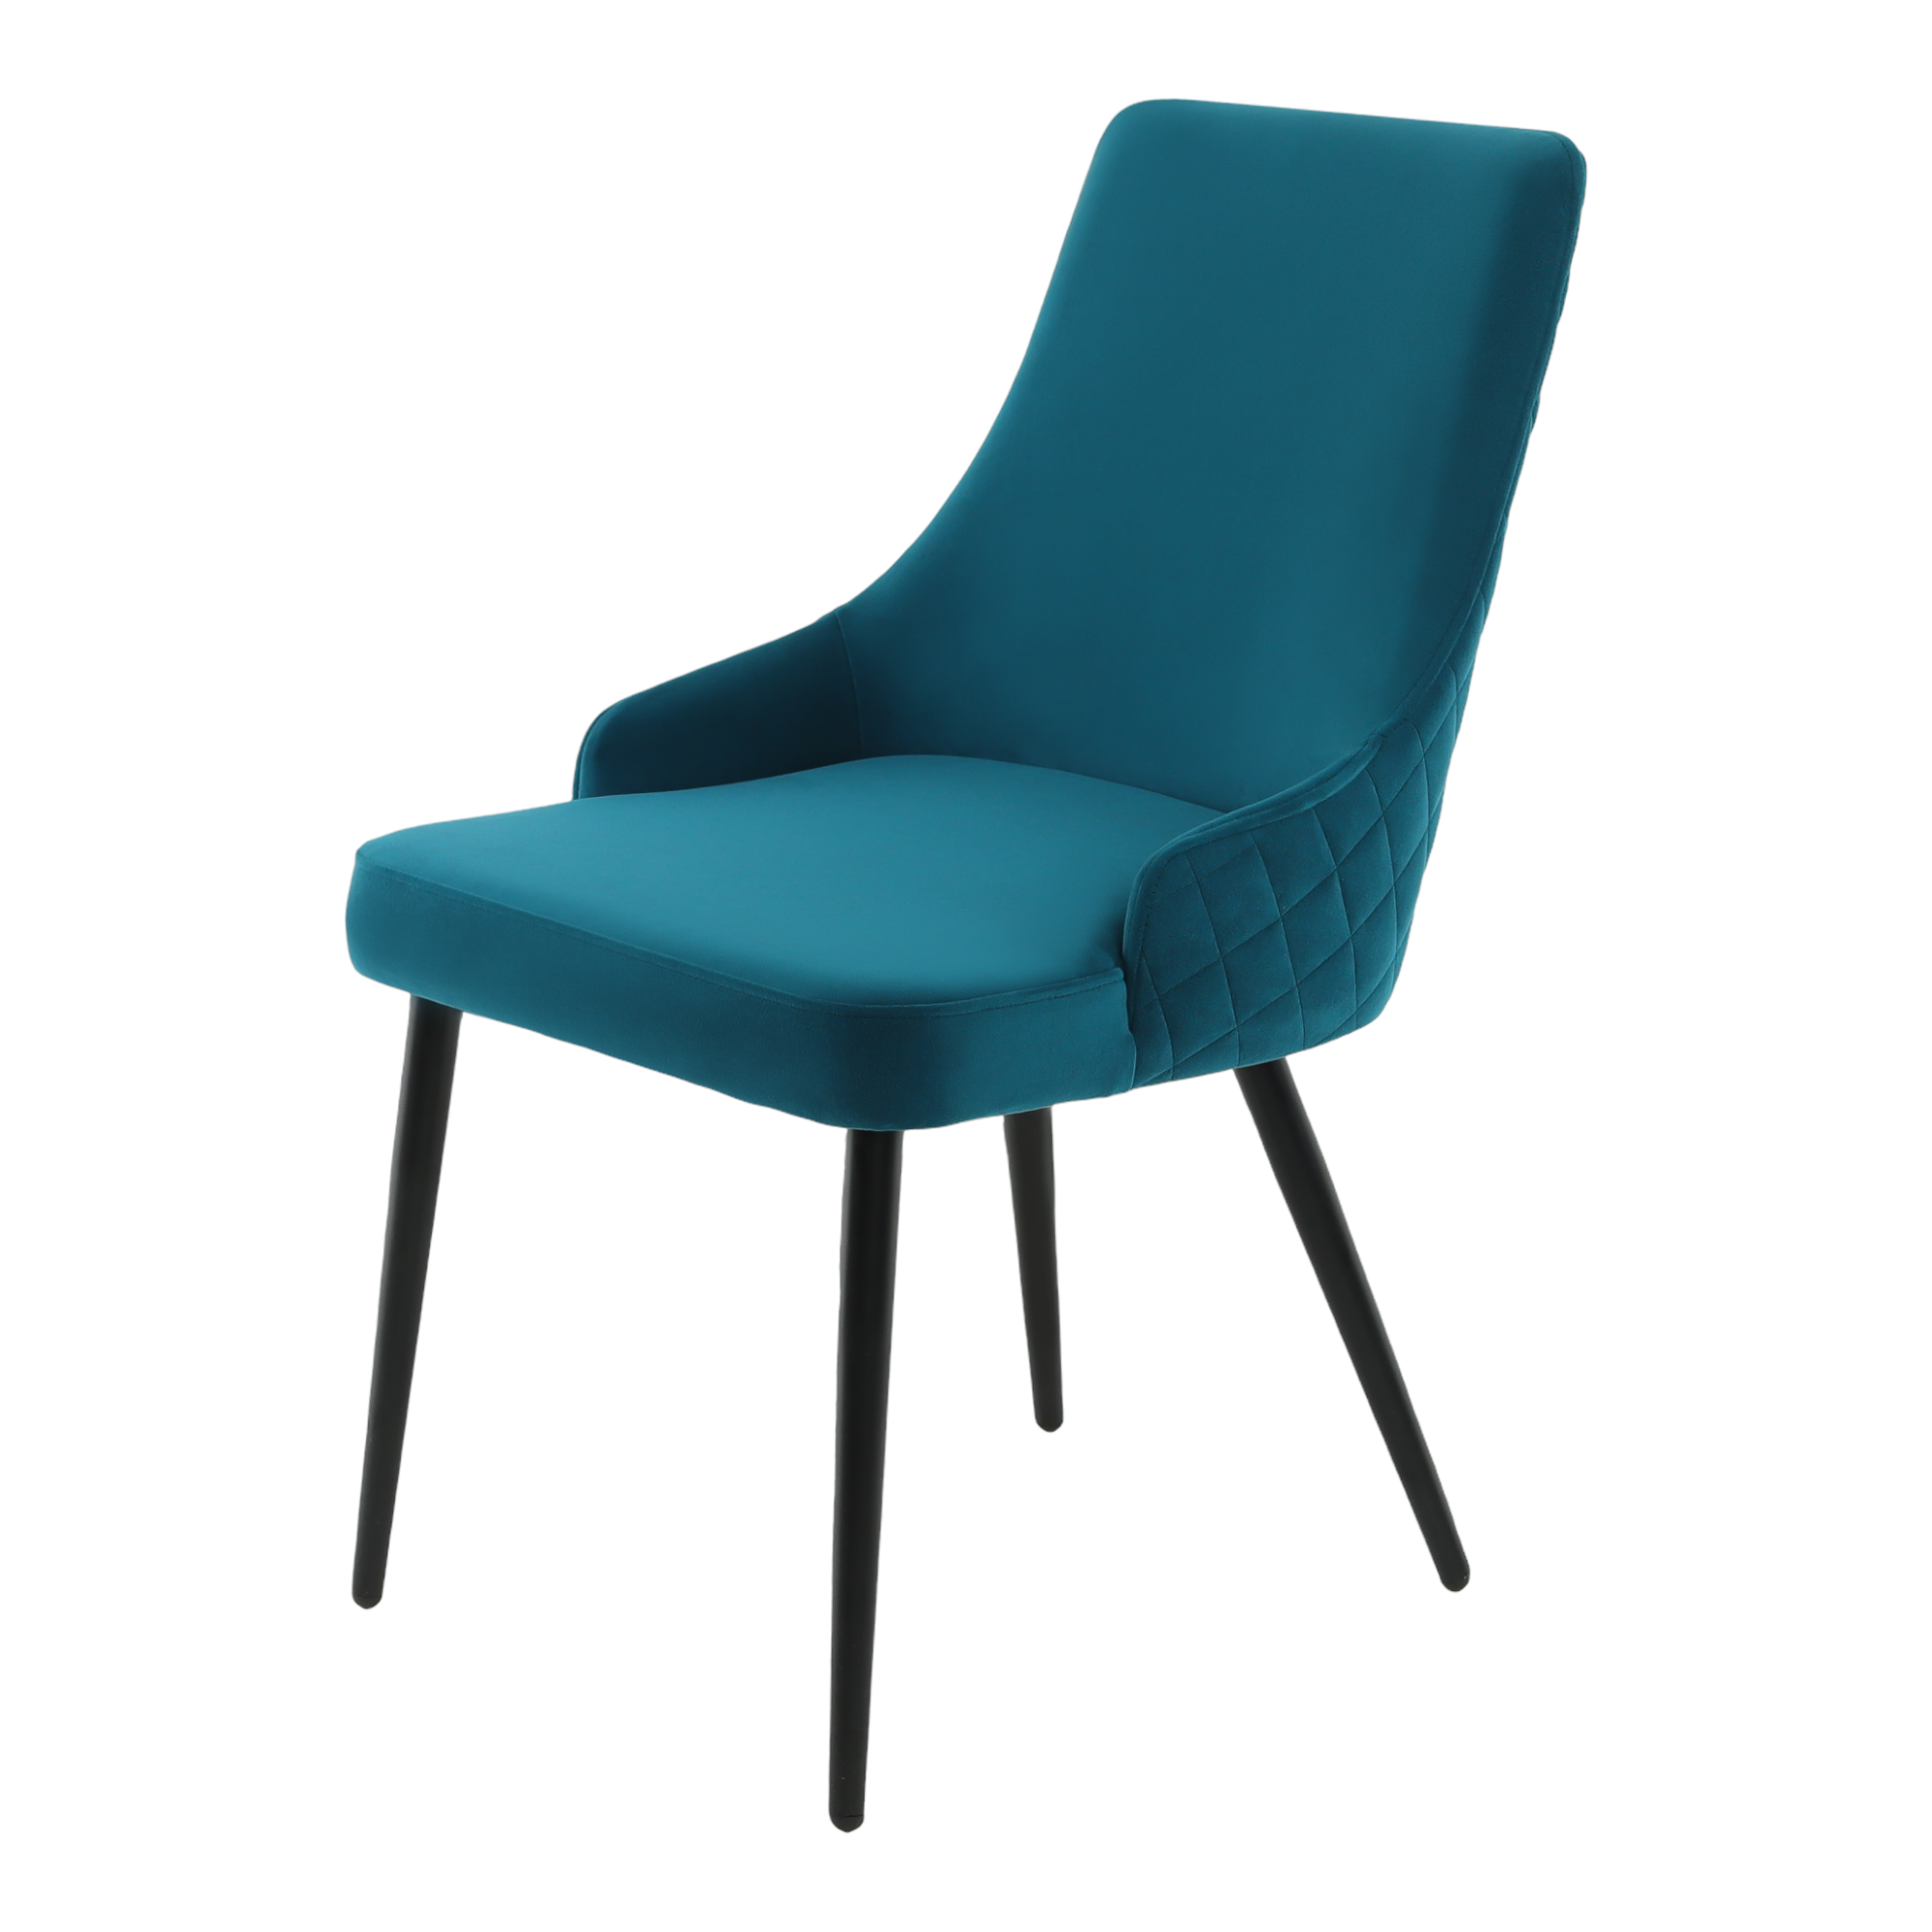 Стул для кухни Chic Chairs Luxury Ocean сине-зеленый